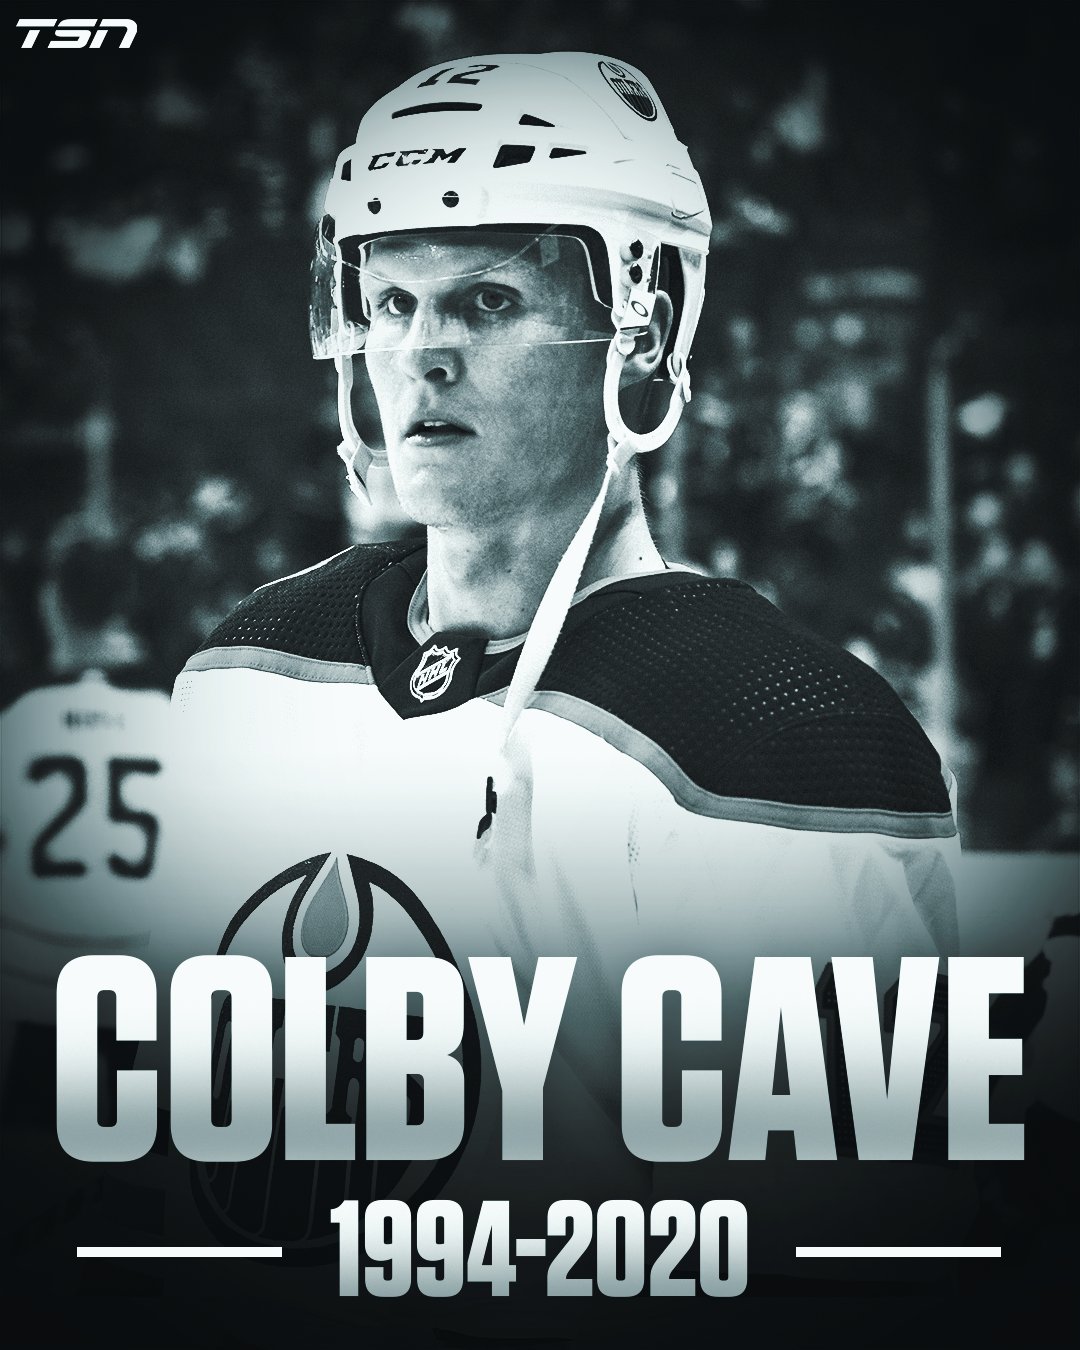 Edmonton Oilers' Colby Cave dies aged 25 after brain bleed